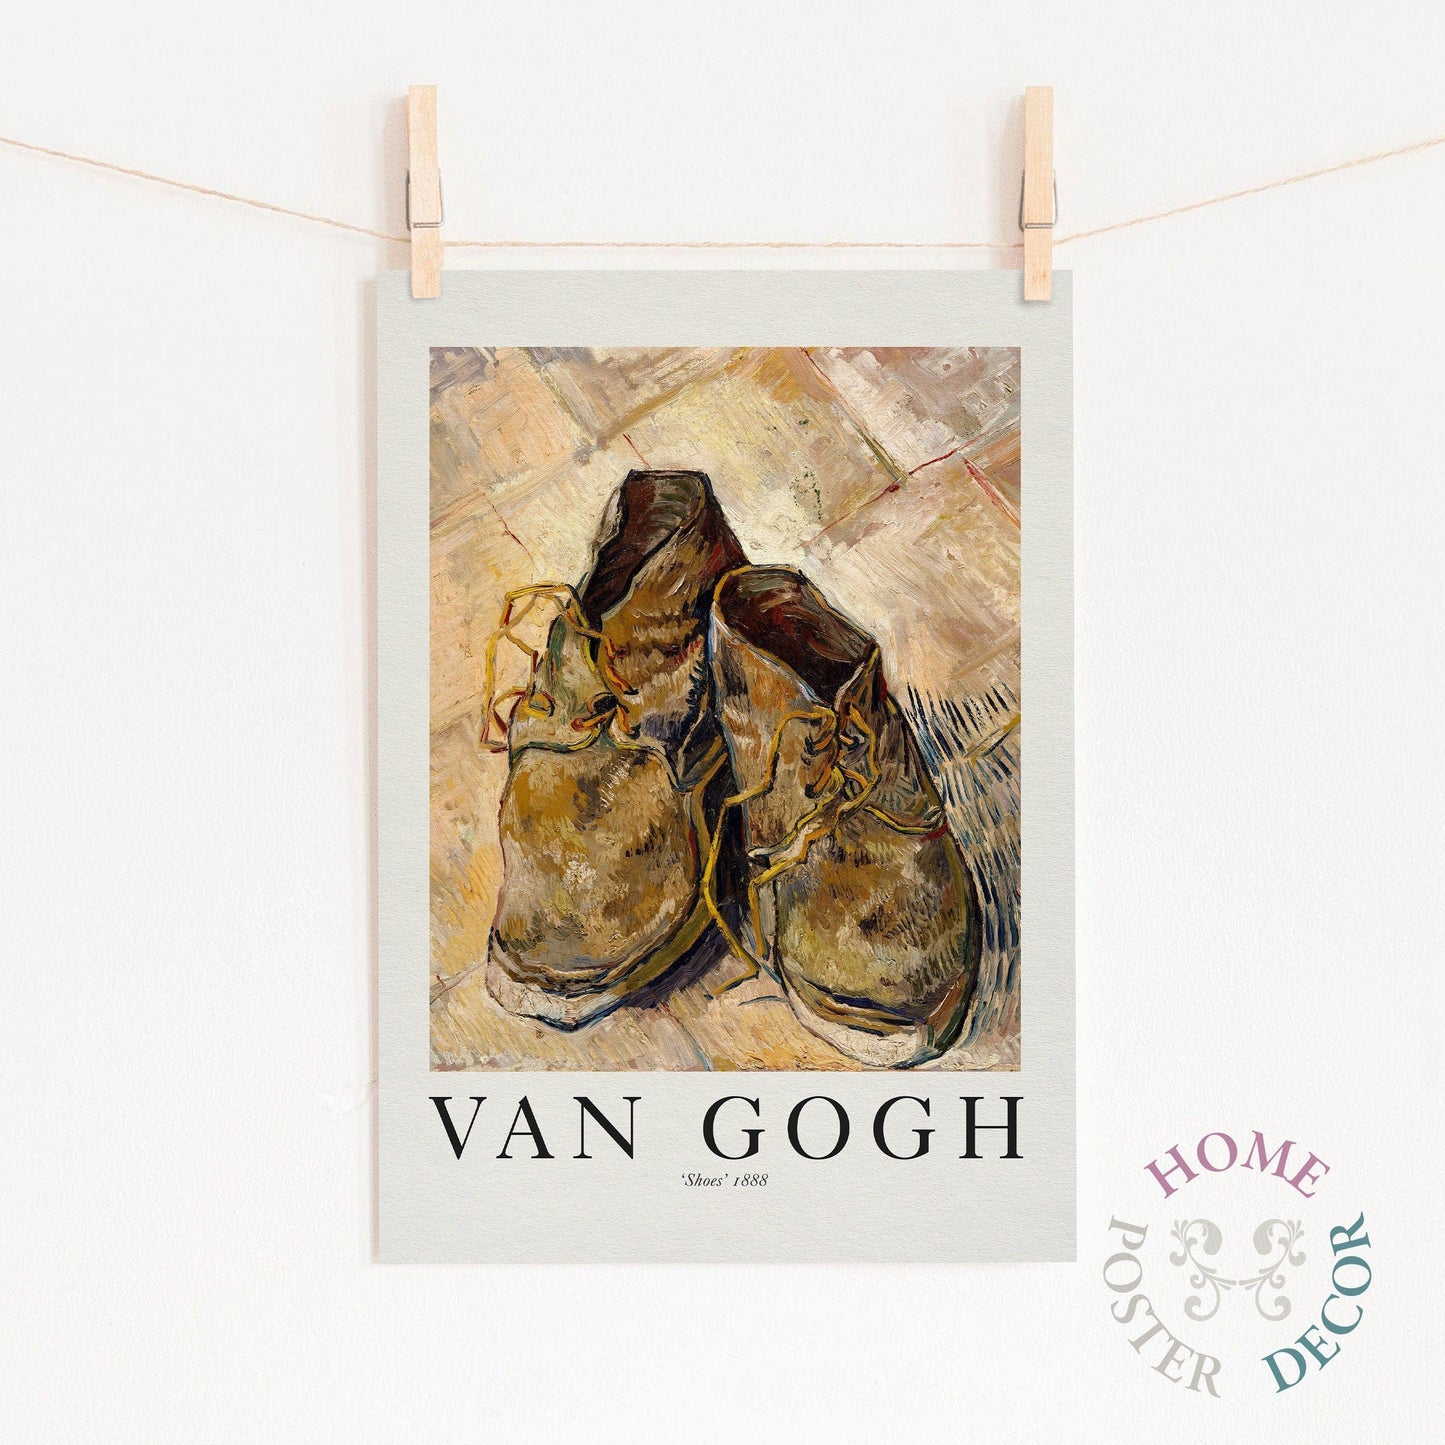 Home Poster Decor Van Gogh Print, Van Gogh Shoes, Van Gogh Painting, Post-impressionist, HIGH Quality Archival Print